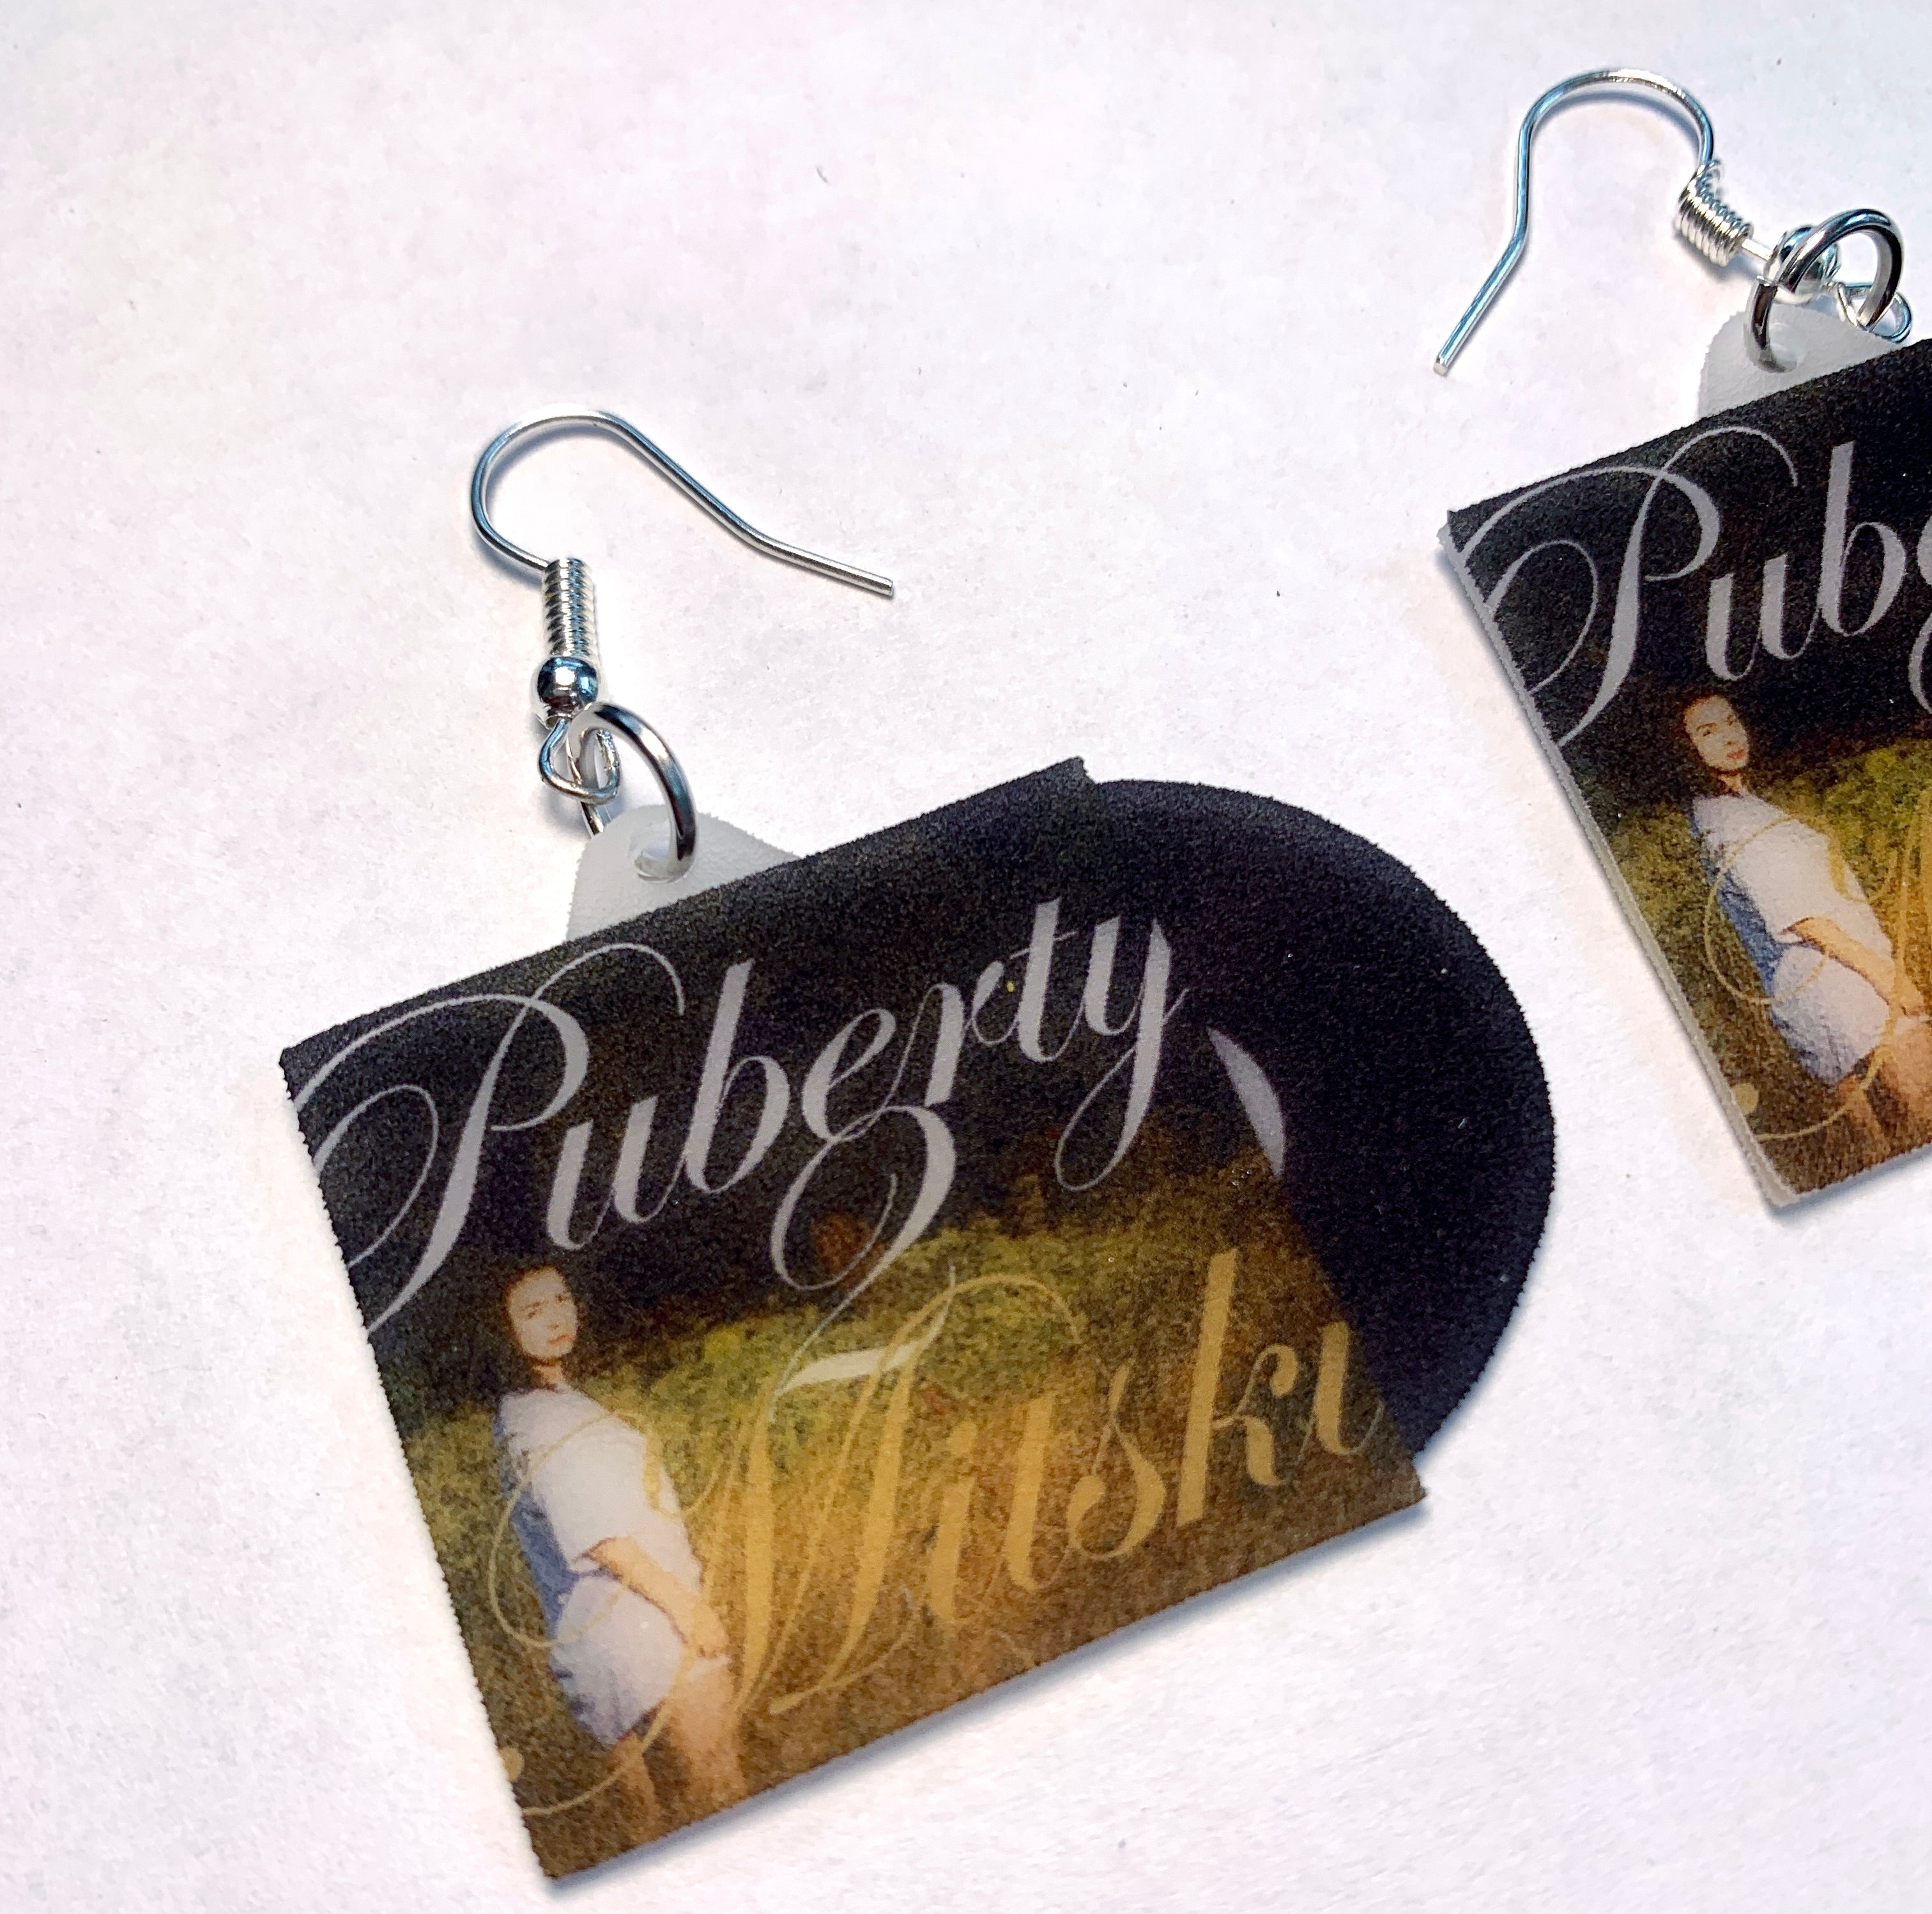 Mitski Puberty 2 Vinyl Album Handmade Earrings!